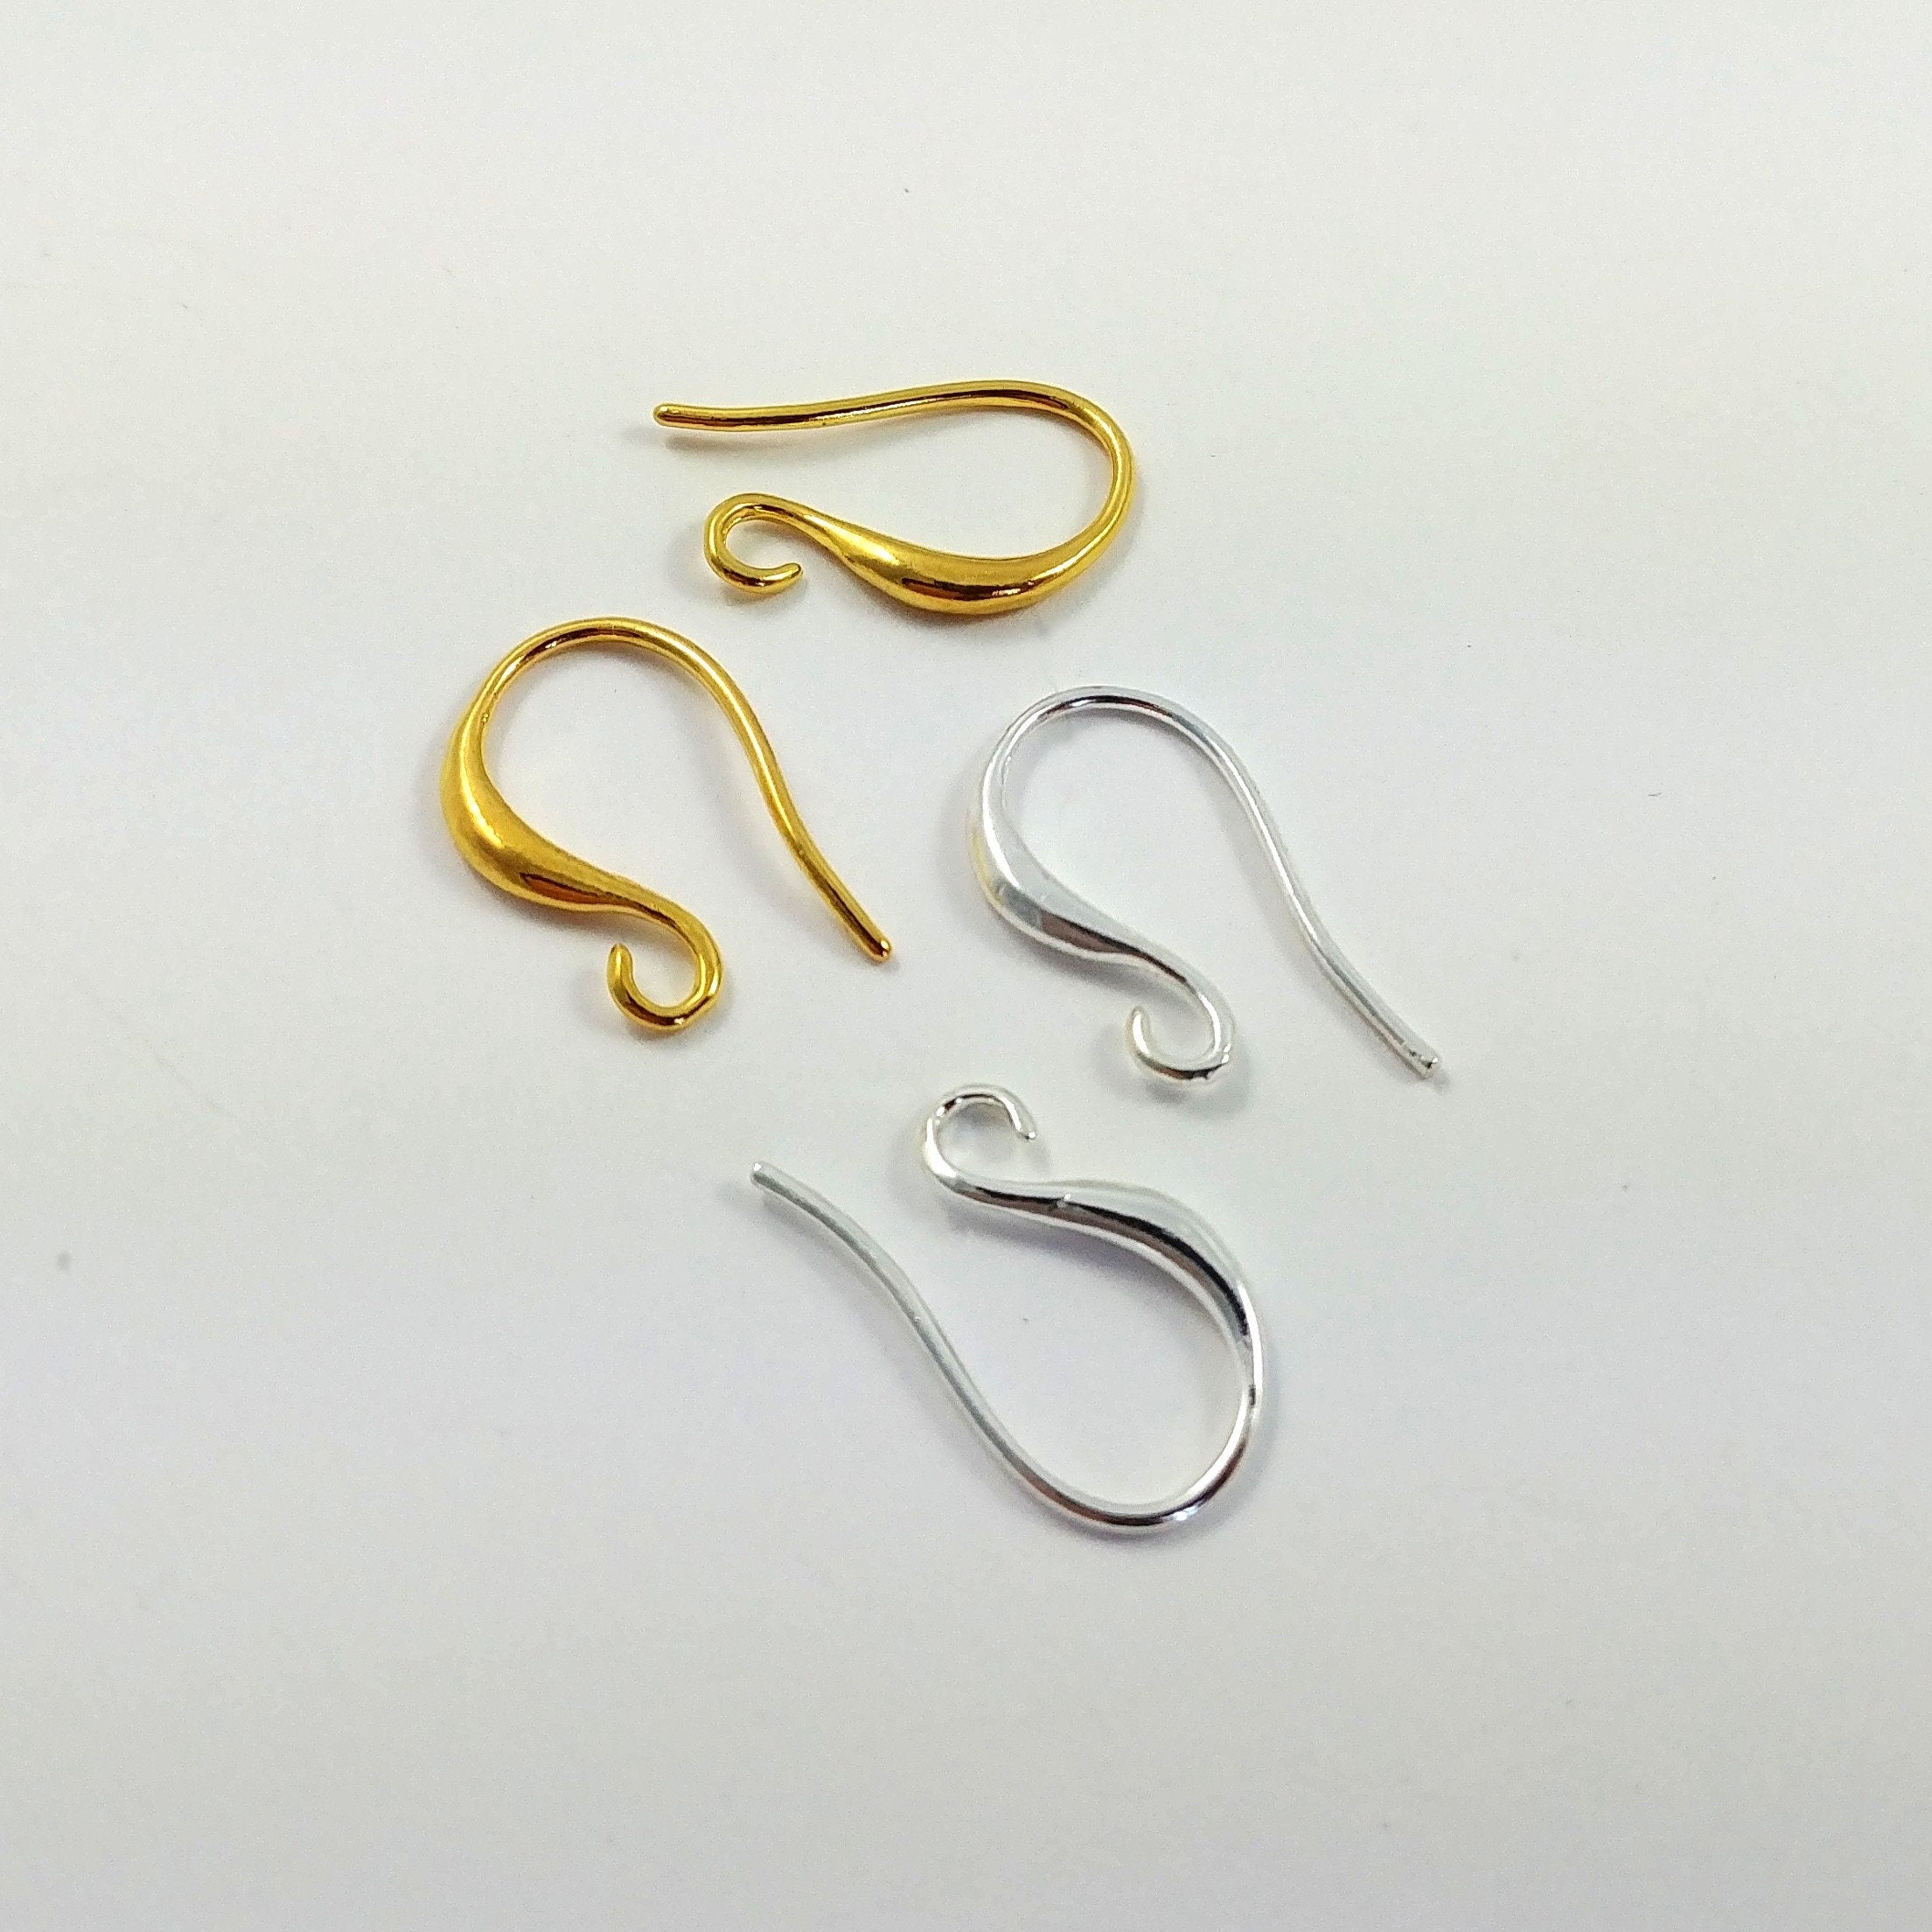 Nickel Free Earring Hooks, Gold And Silver Brass Ear Wire